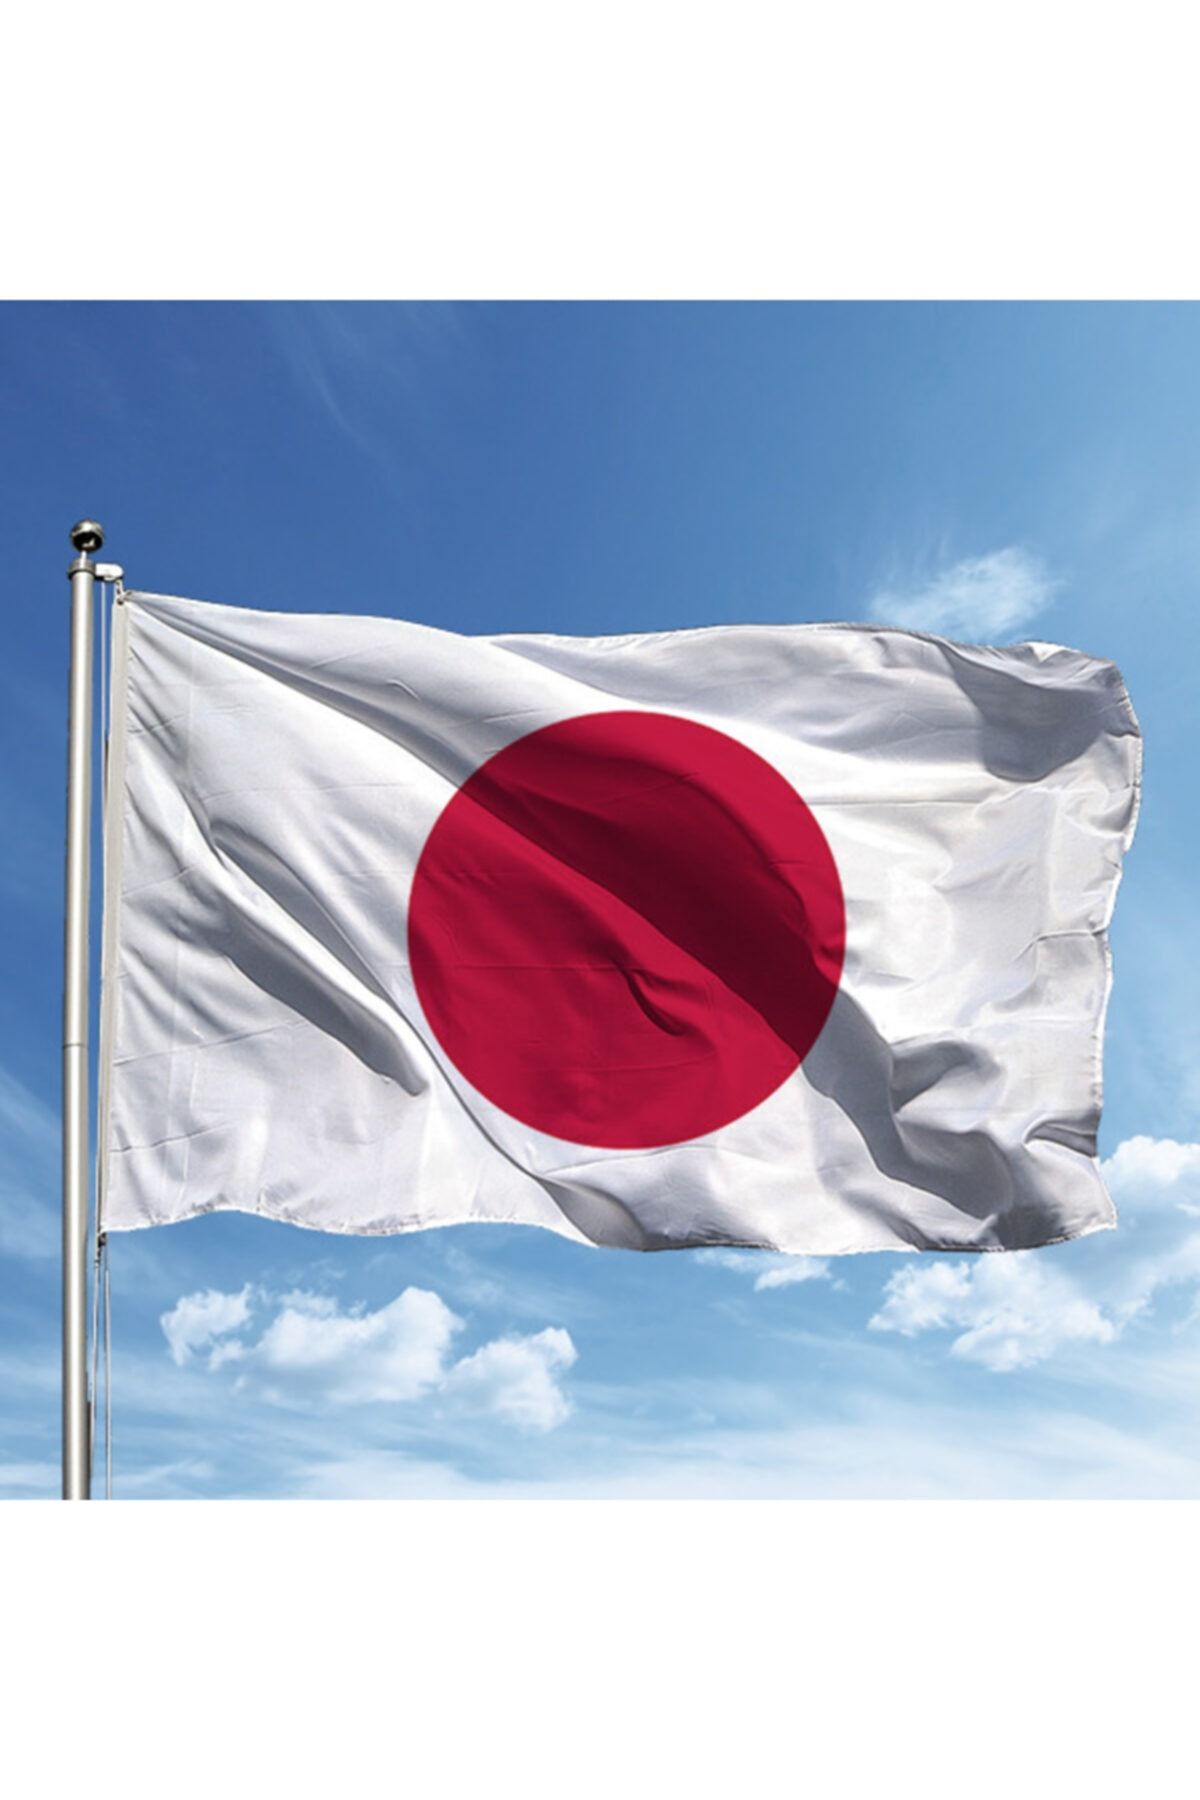 Özgüvenal Japonya Bayrağı 50*75